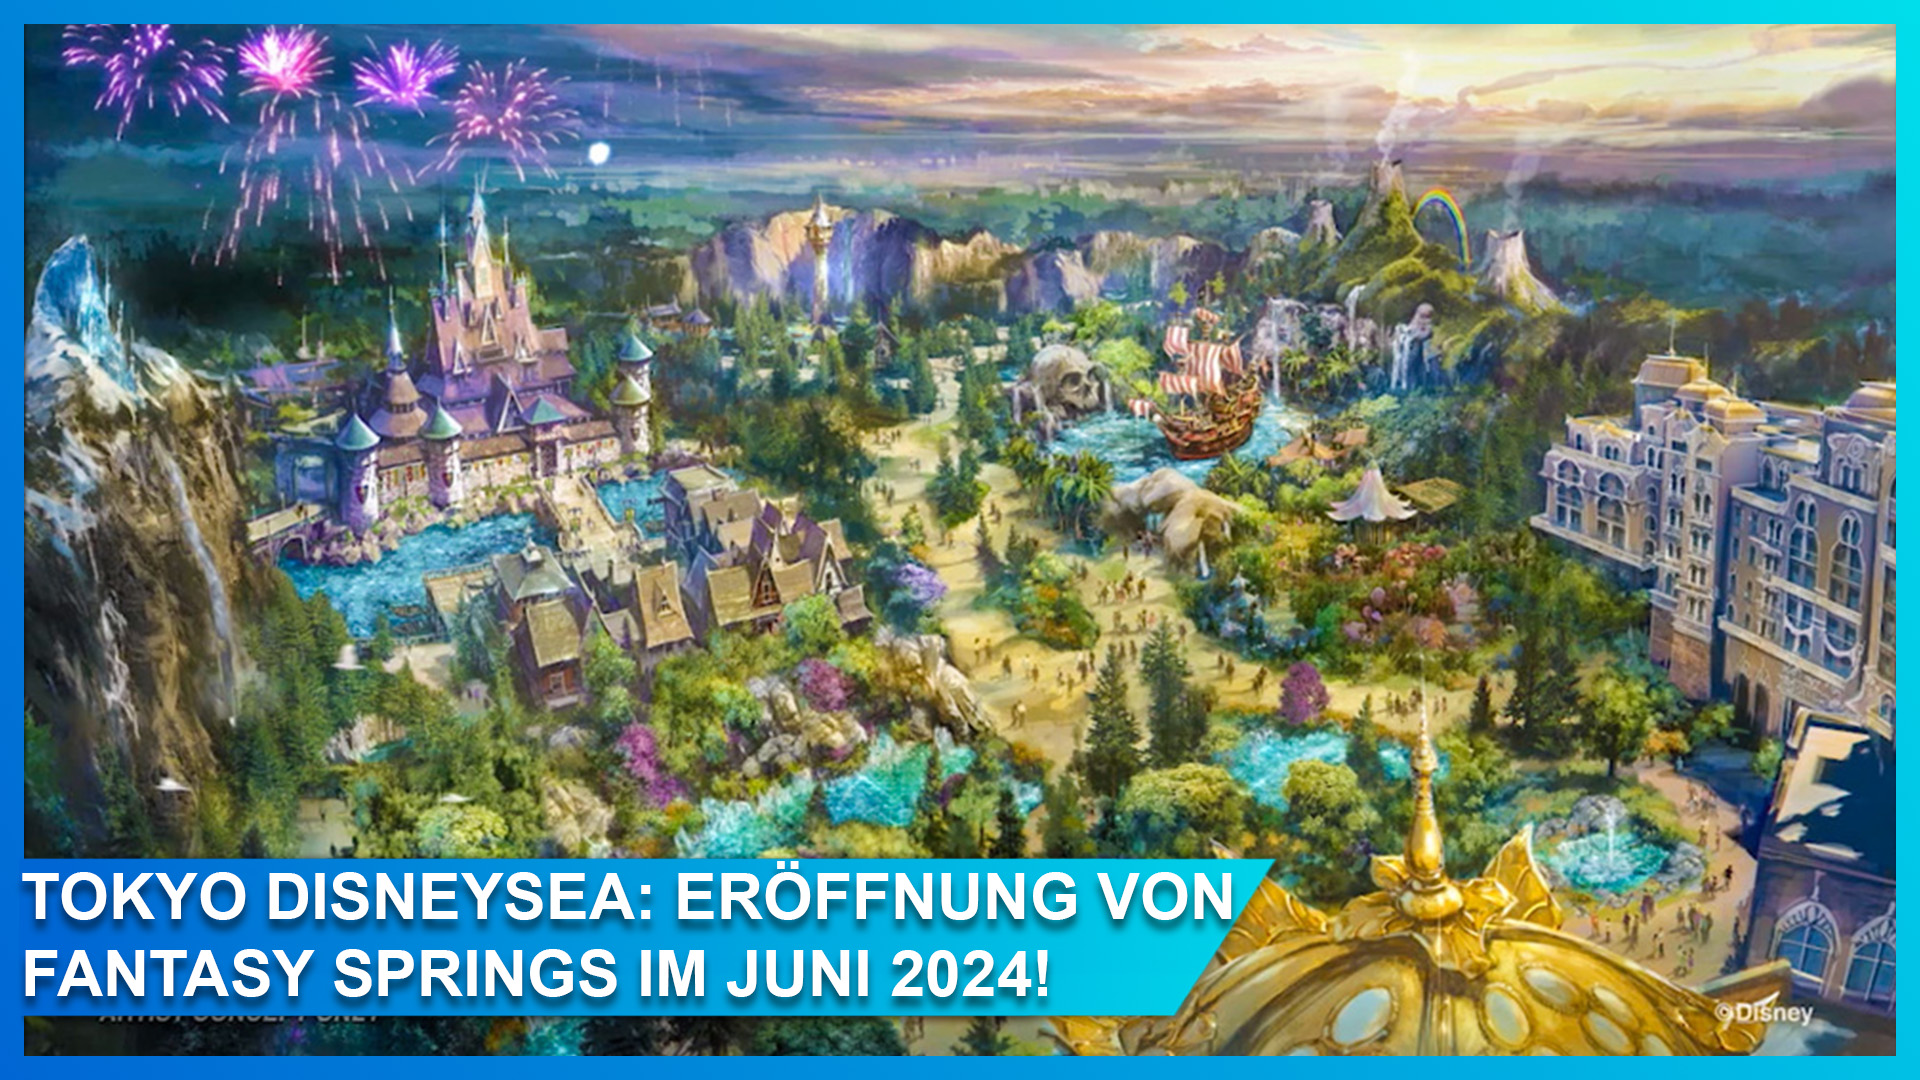 Fantasy Springs eröffnet in Tokyo DisneySea am 24. Juni 2024 (Tokyo Disney Resort, Japan)